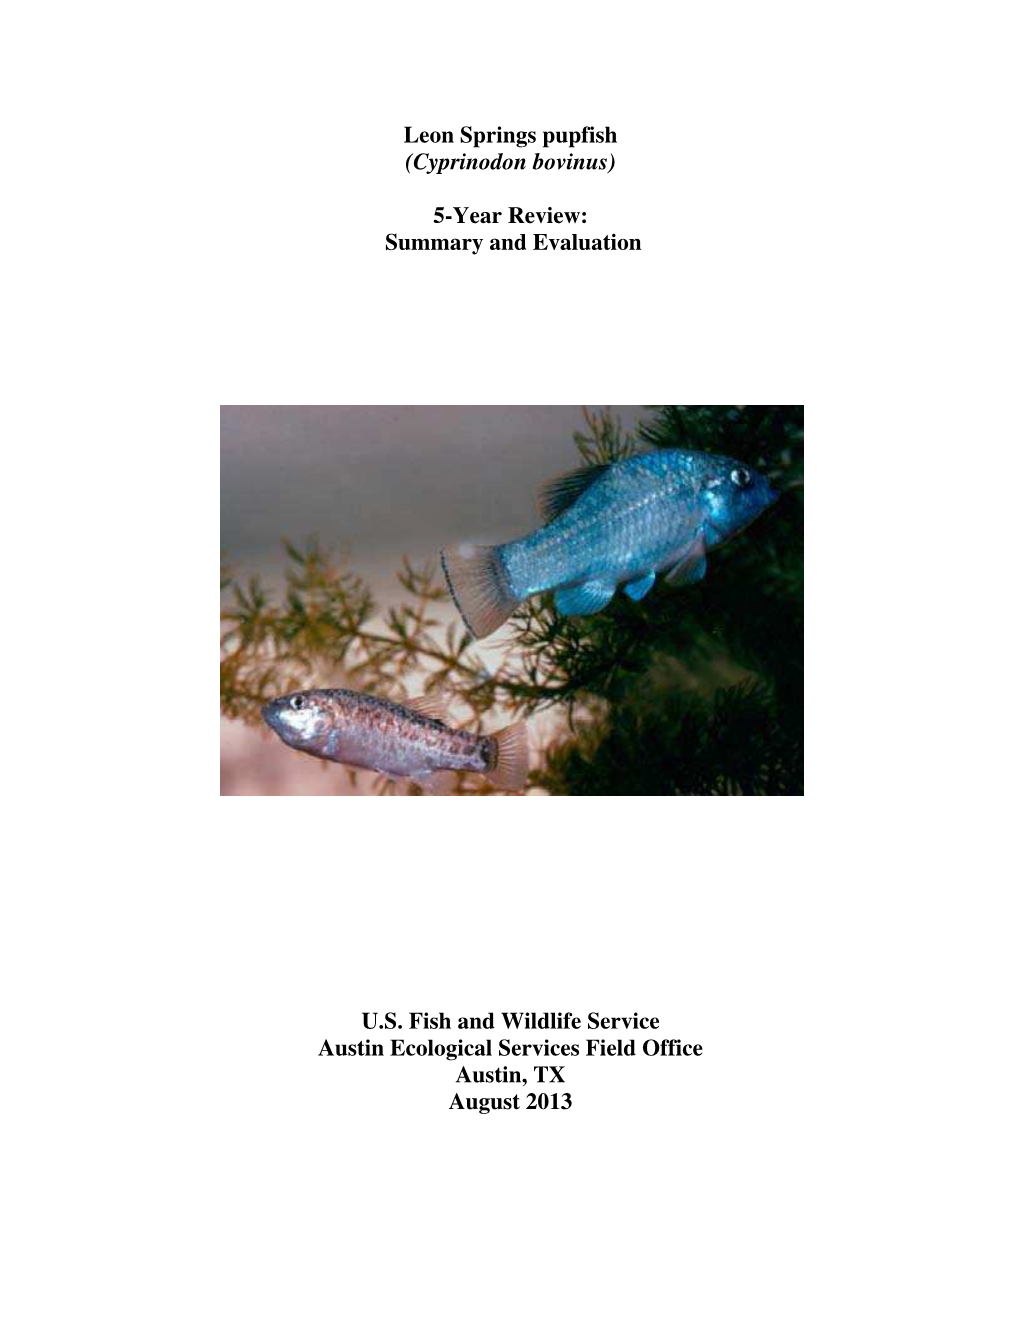 Leon Springs Pupfish (Cyprinodon Bovinus) 5-Year Review